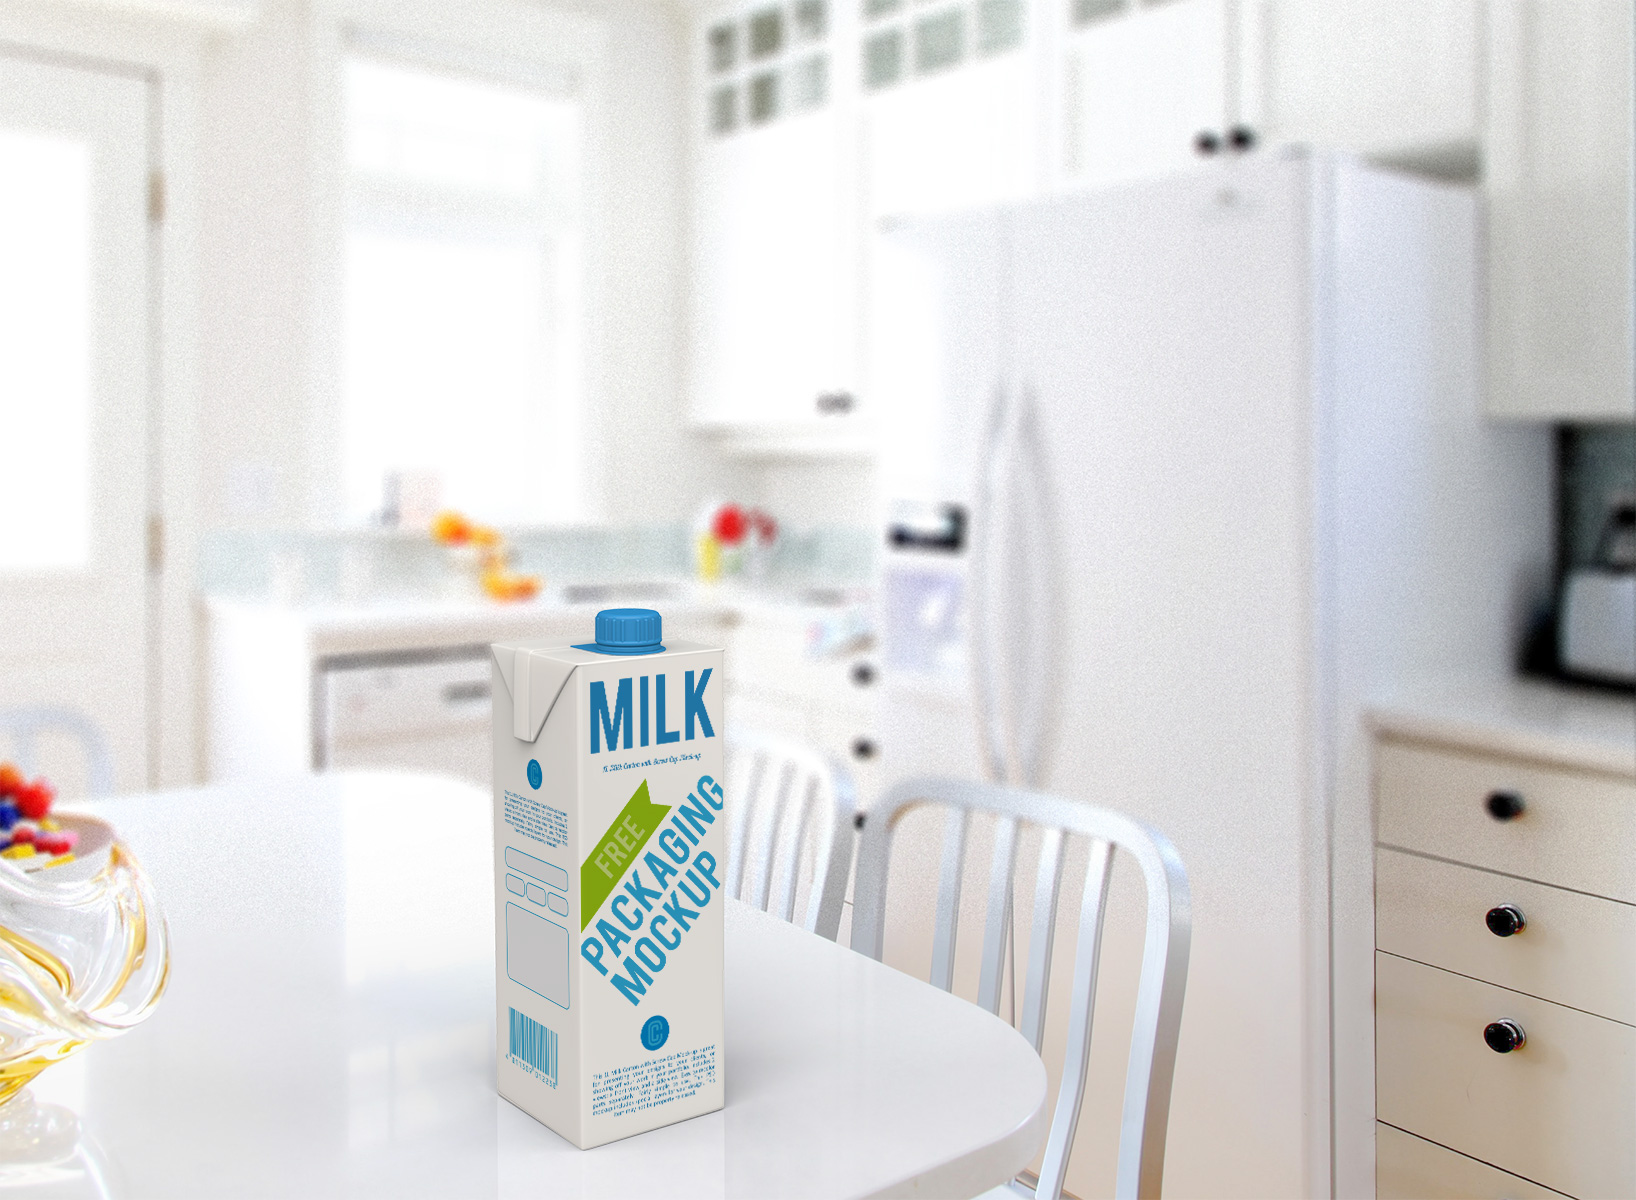 Milk Carton Mock-Up 牛奶包装贴图模版